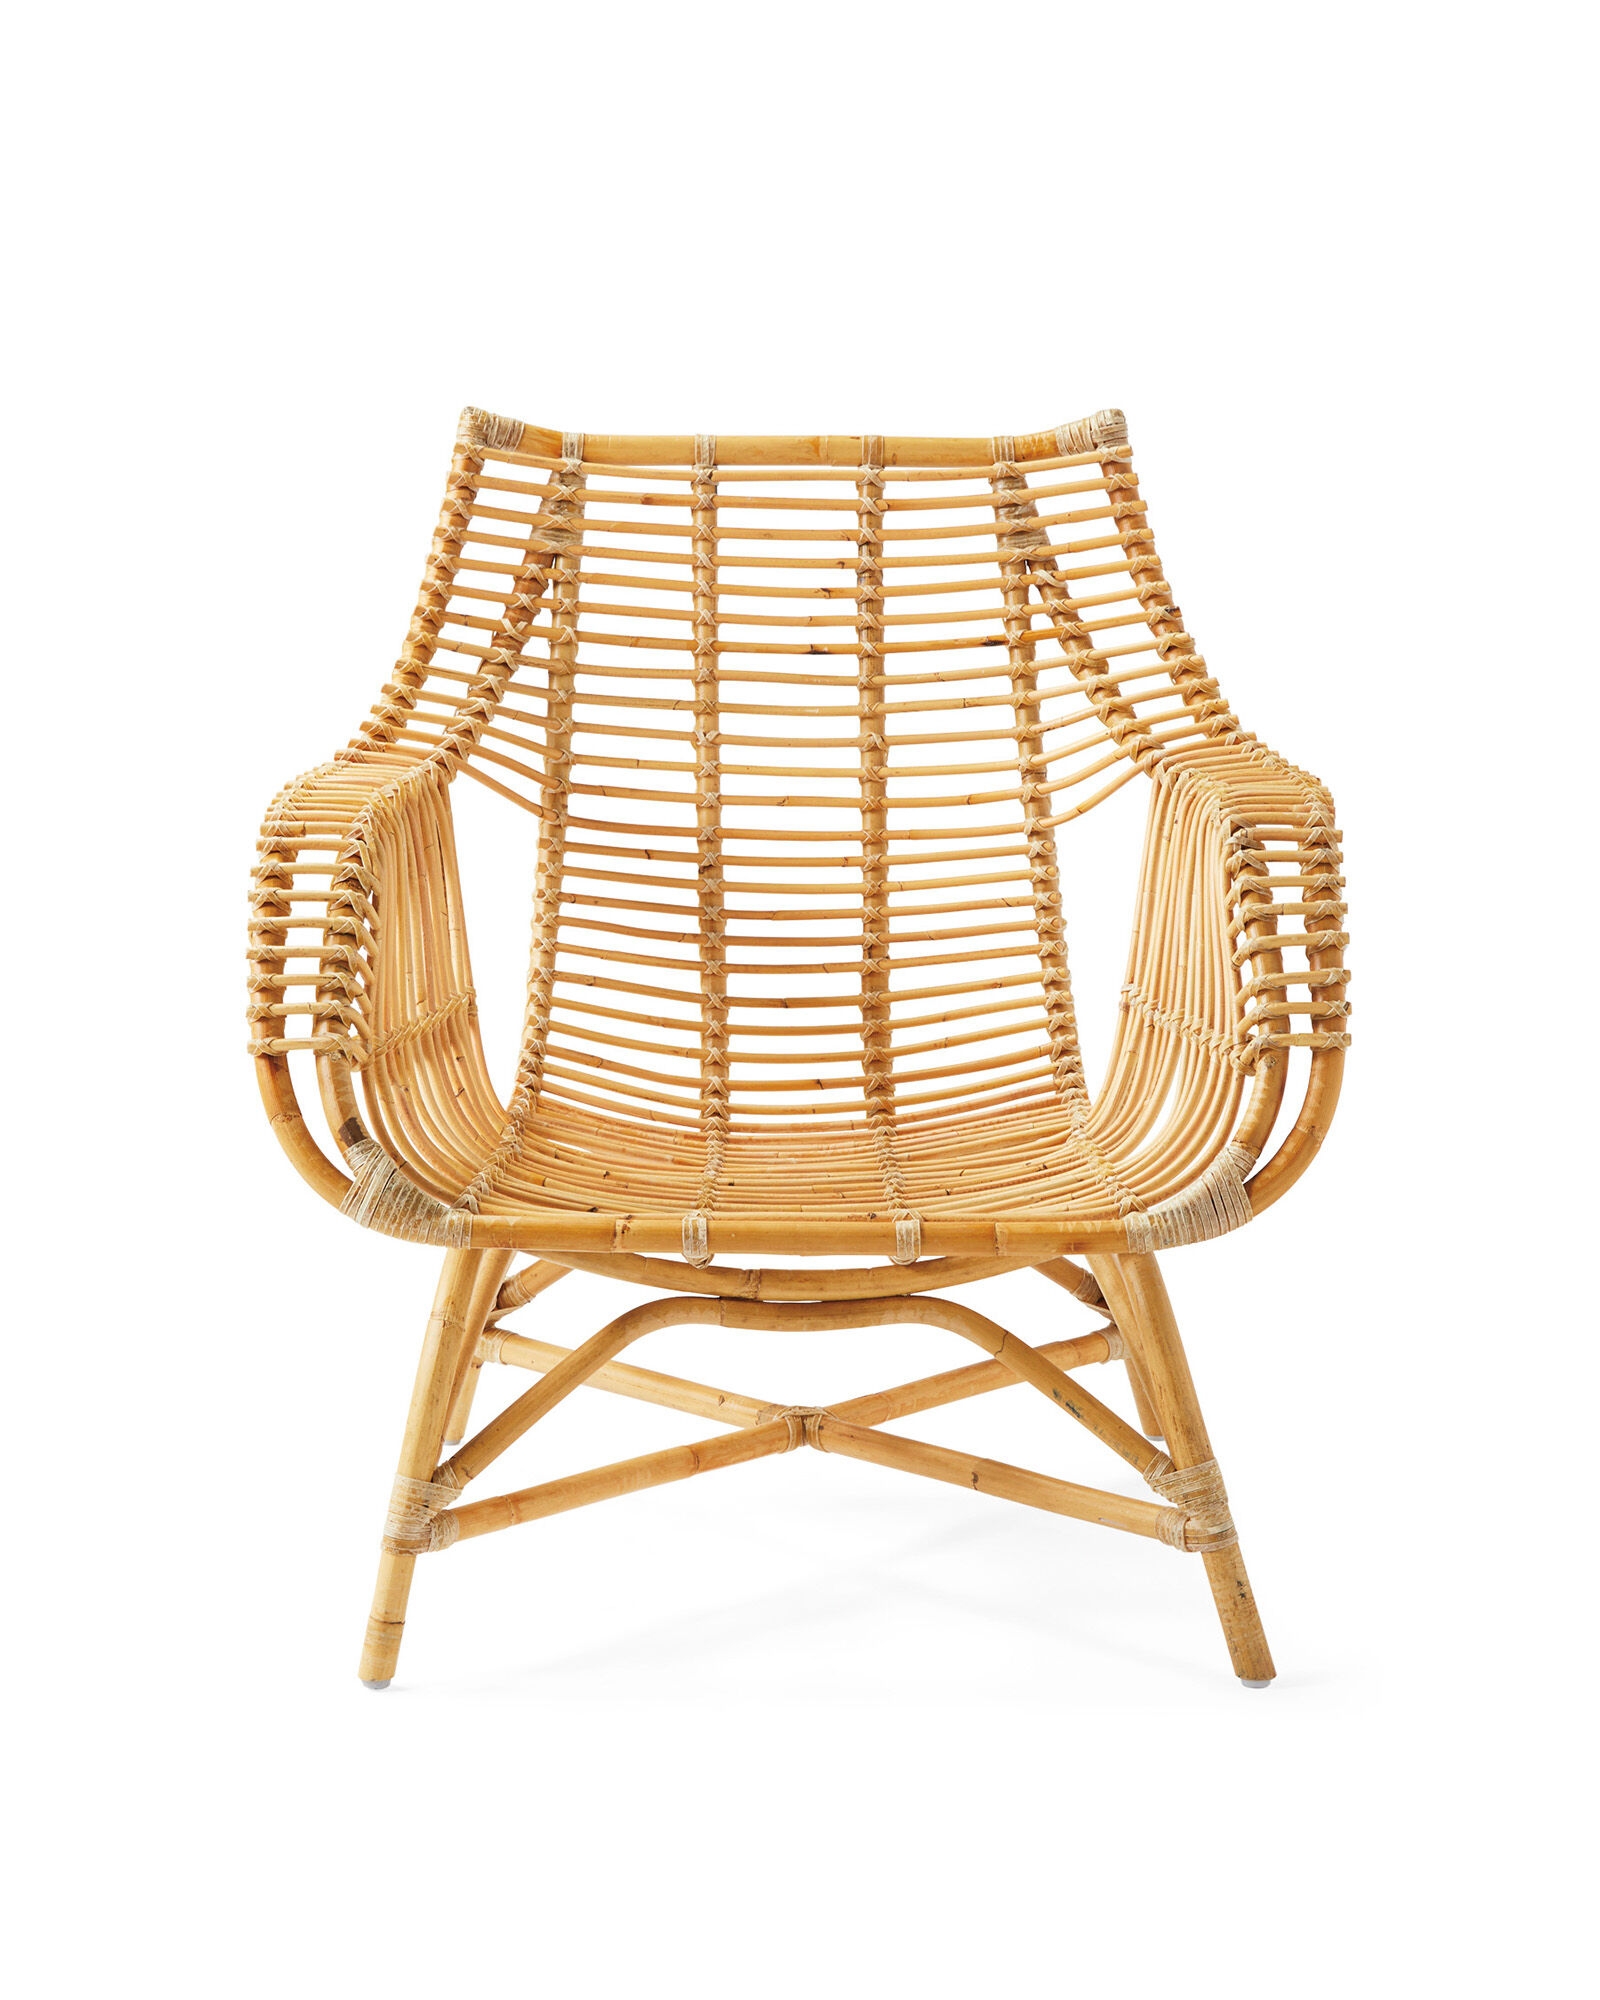 Venice Rattan Chair - Image 0